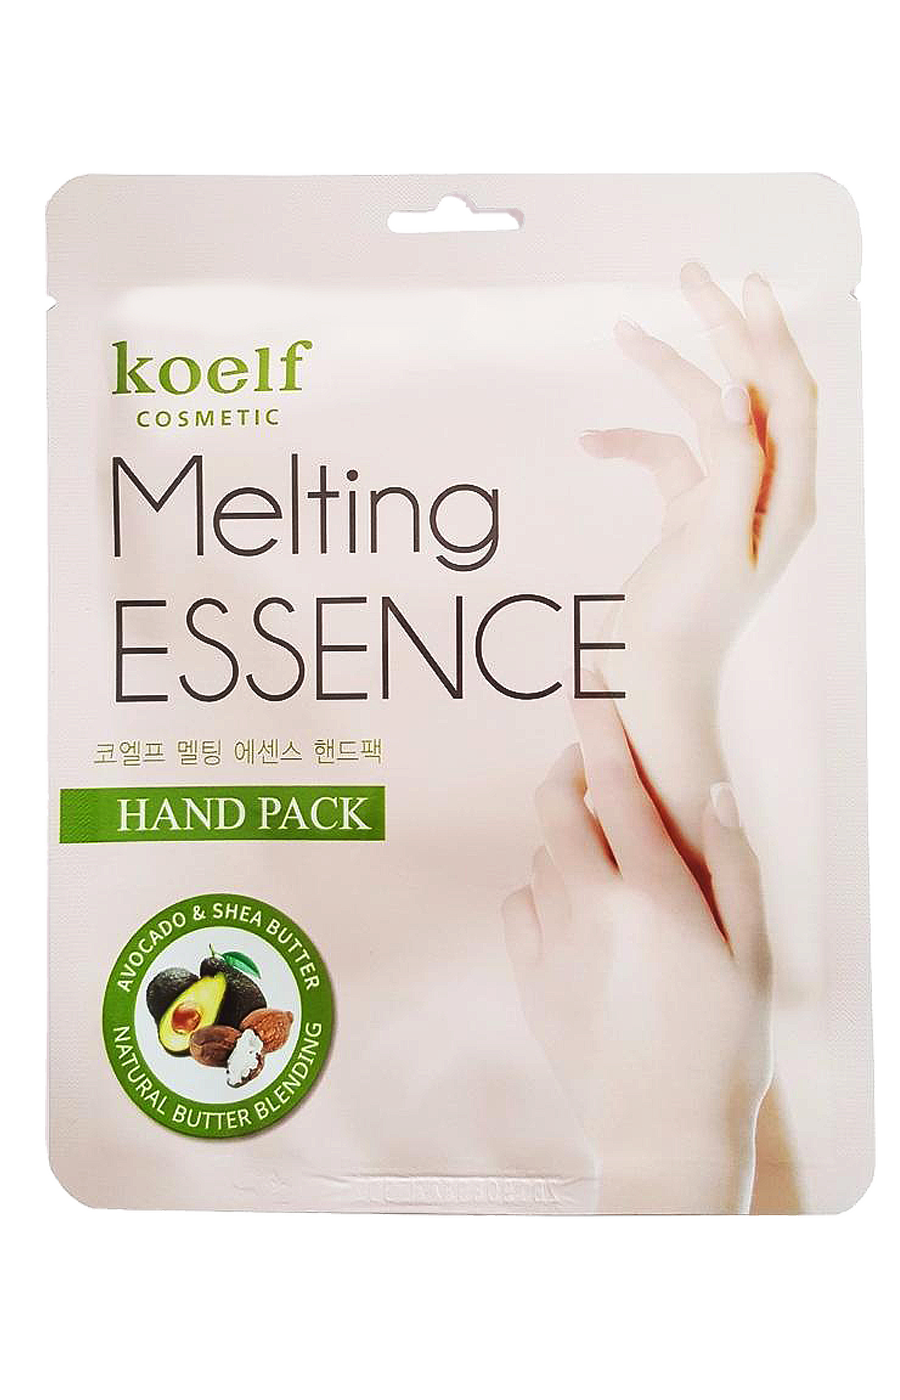 Koelf Melting Essence Hand Pack смягчающая маска-перчатки для рук, 1шт